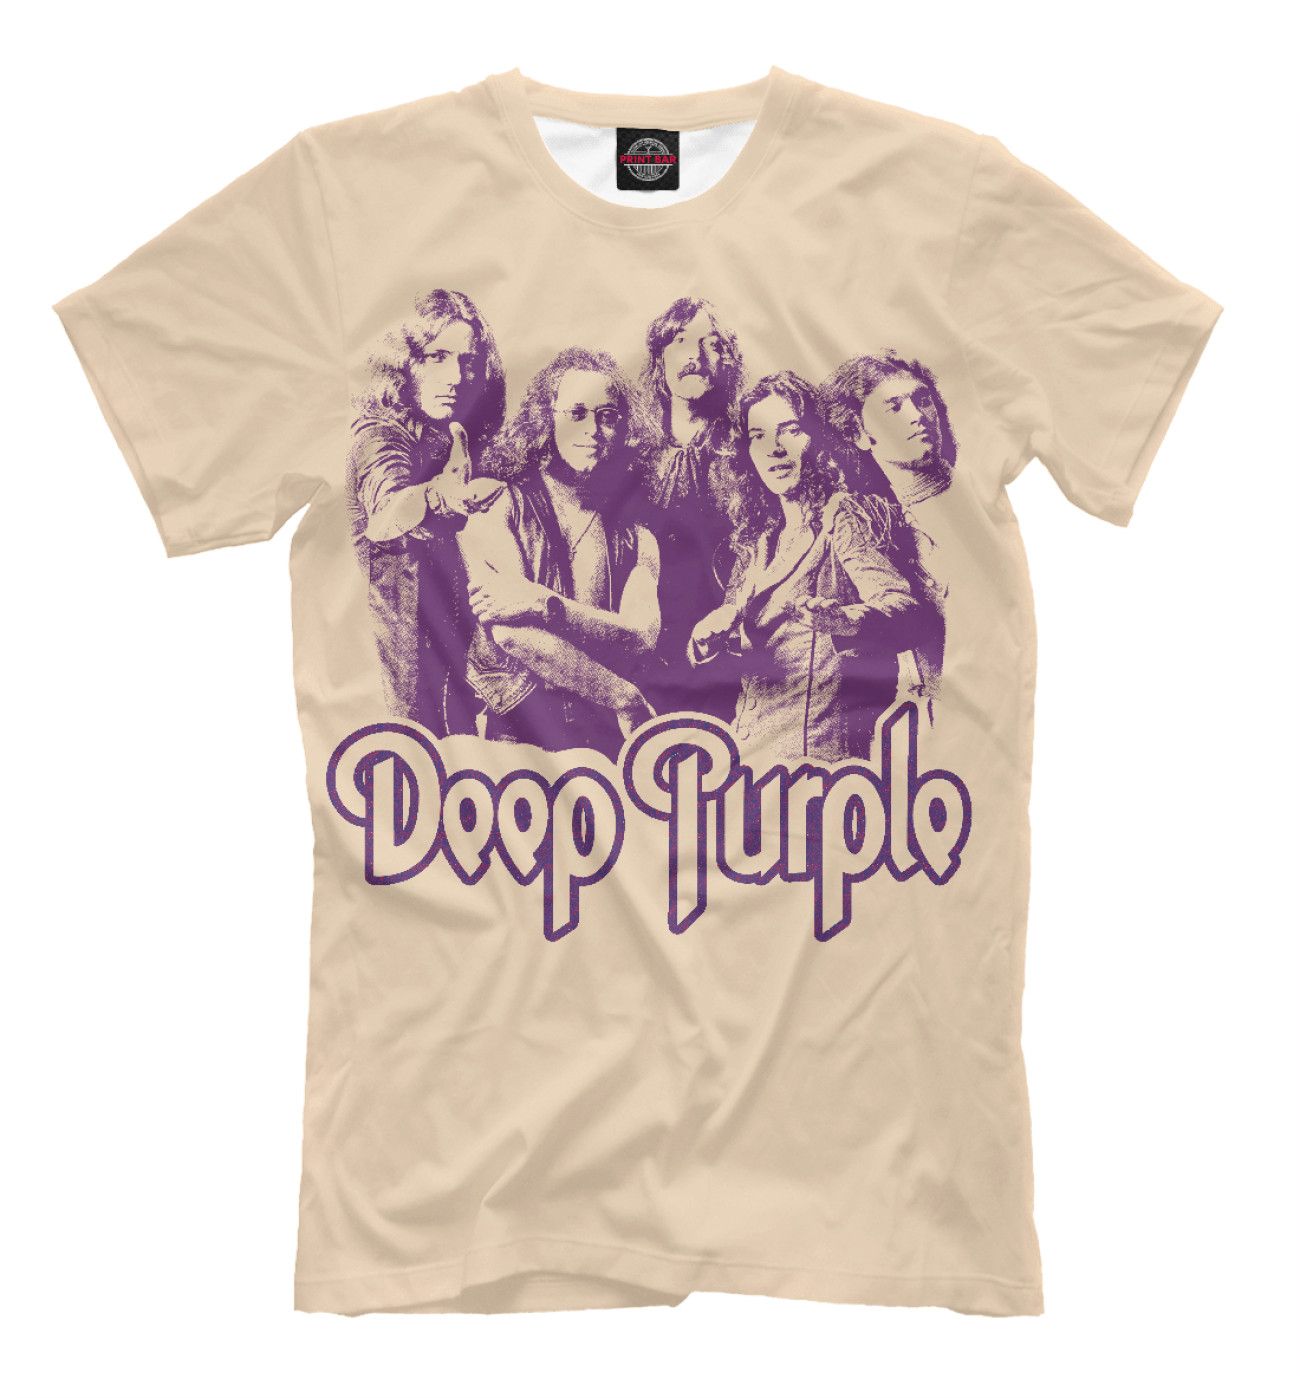 Мужская Футболка Deep Purple, артикул: PUR-254422-fut-2